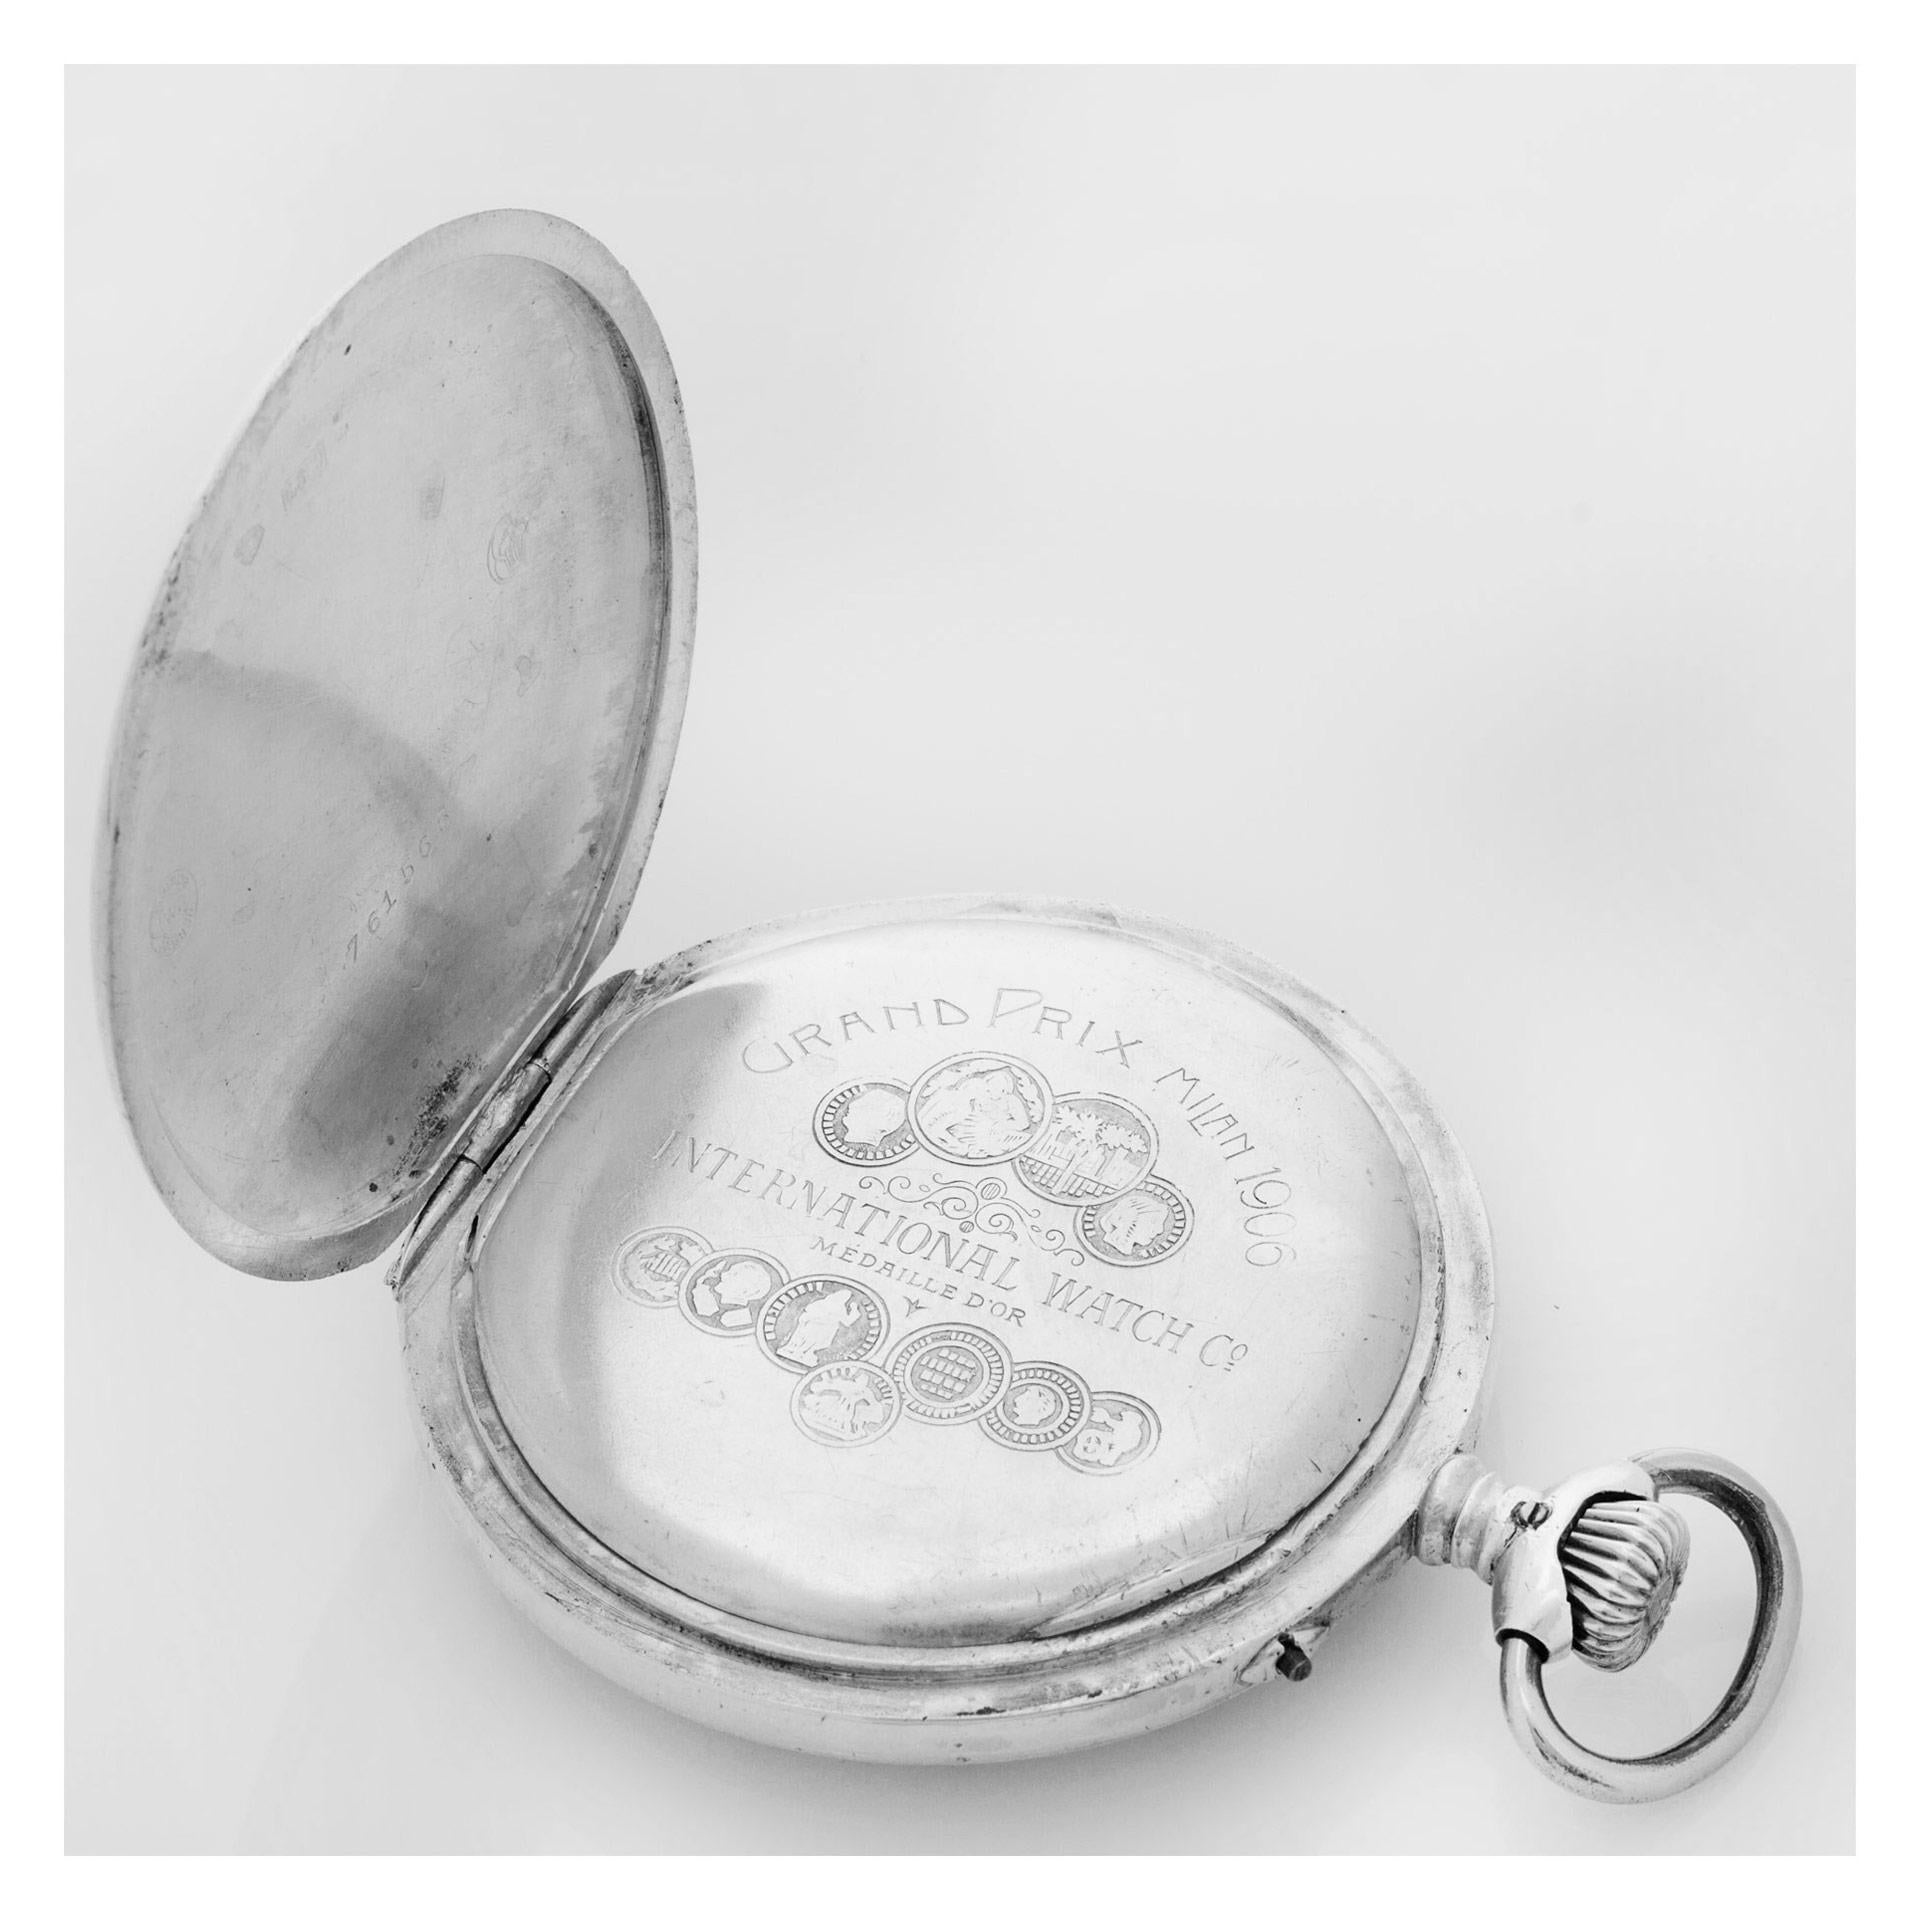 Men's IWC Pocket Watch Ref 761566, Silver Porcelain Dial, Manual